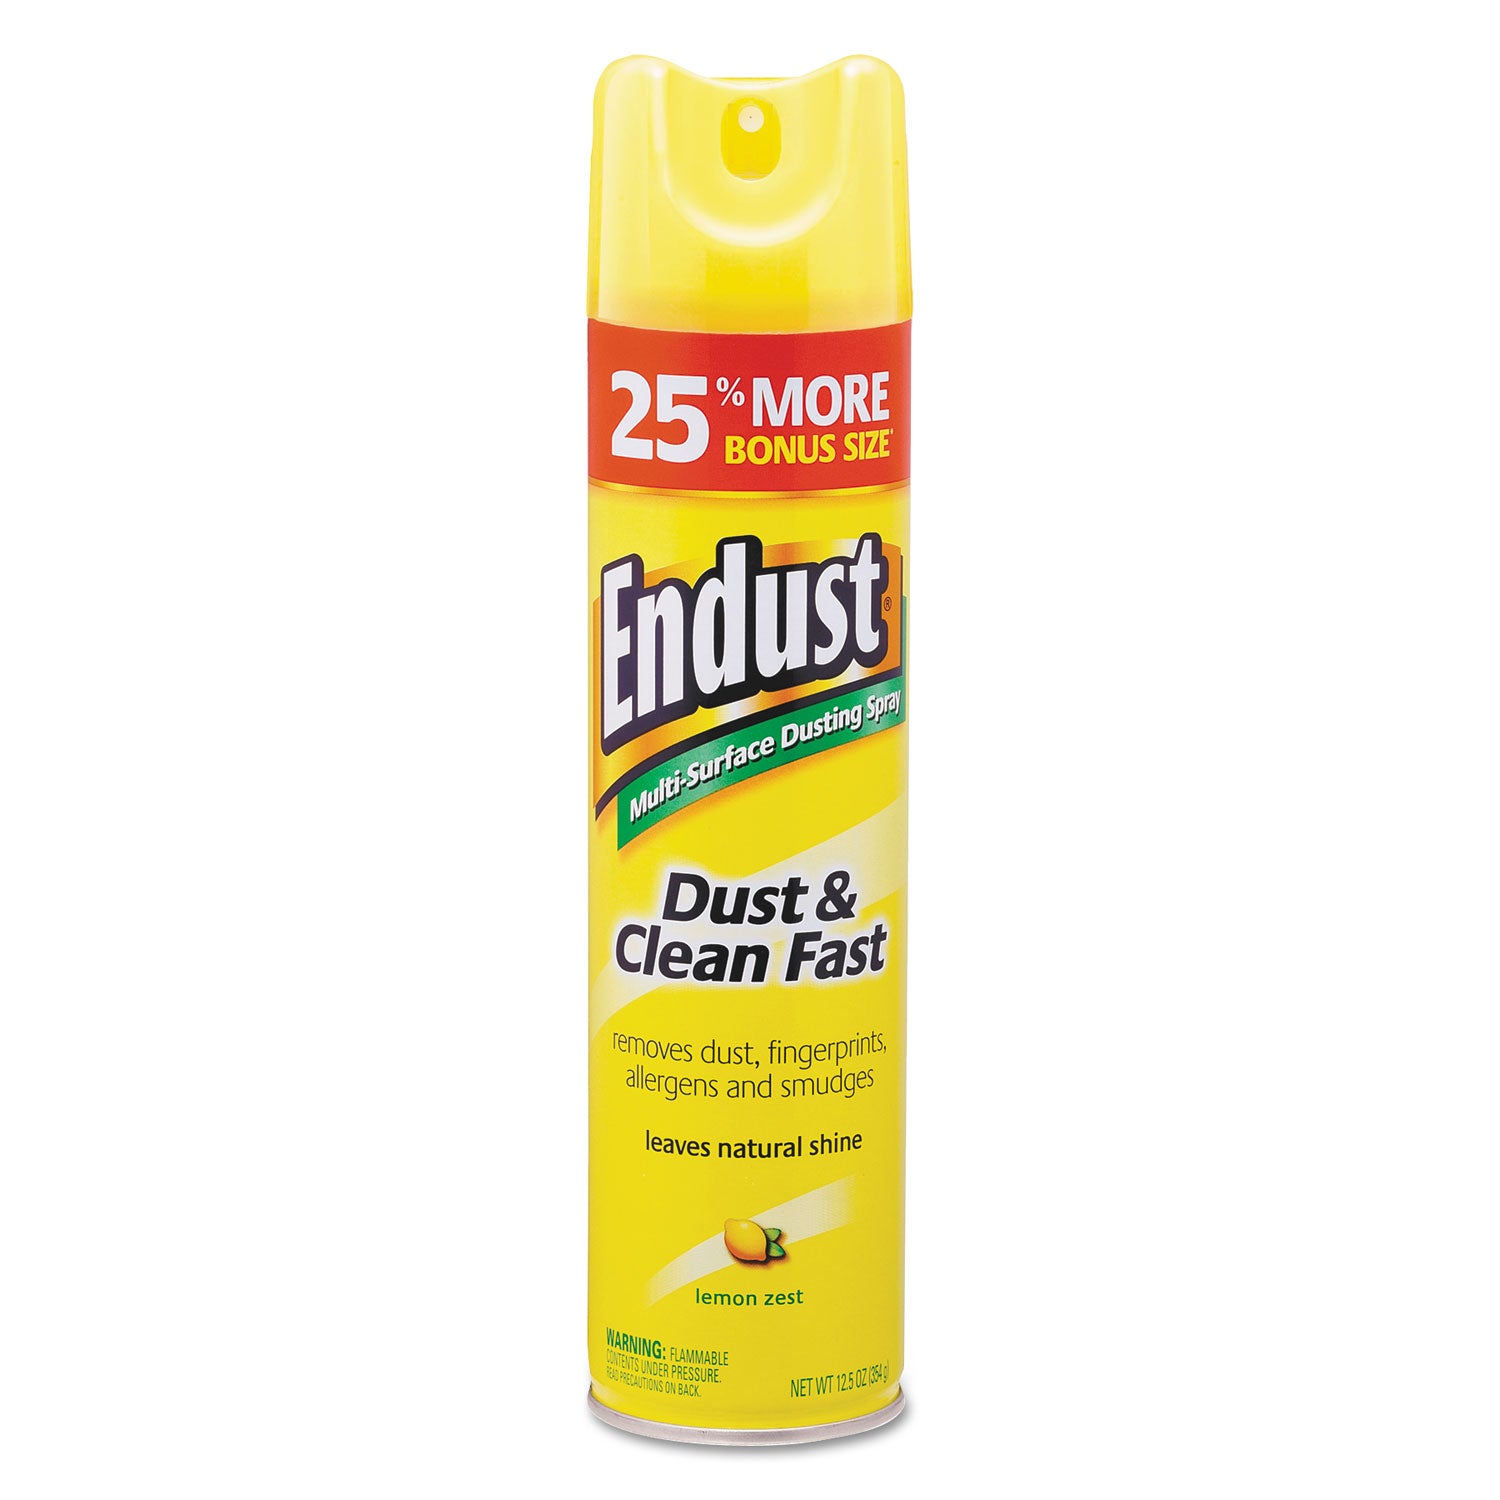 endust-multi-surface-dusting-and-cleaning-spray-lemon-zest-125-oz-aerosol-spray-6-carton_dvocb508171 - 2